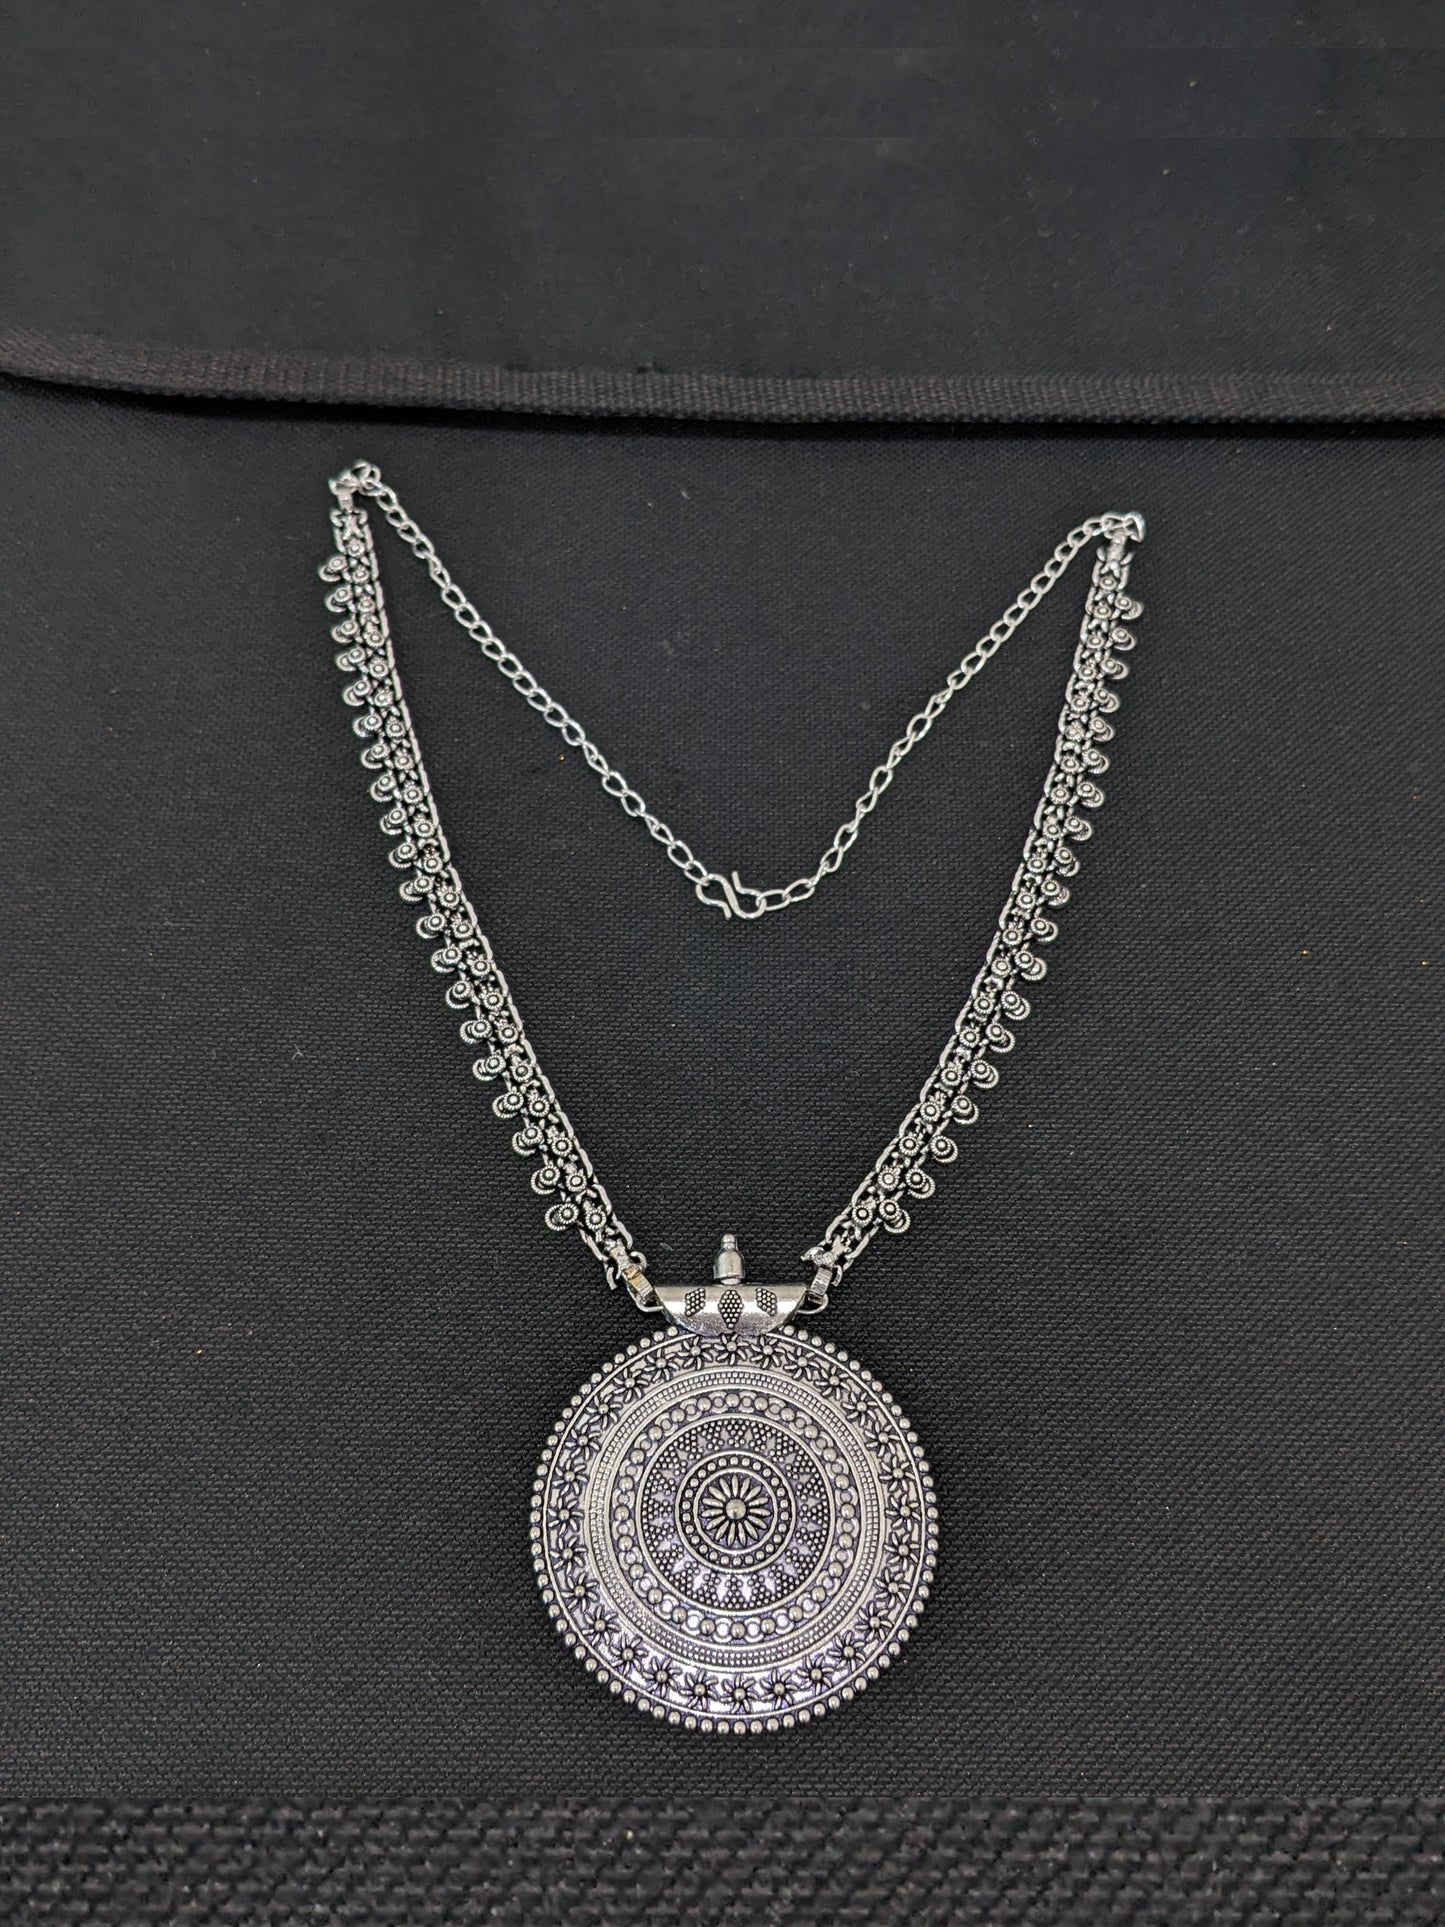 Classic Evergreen design Round Pendant Chain Antique Silver Necklace